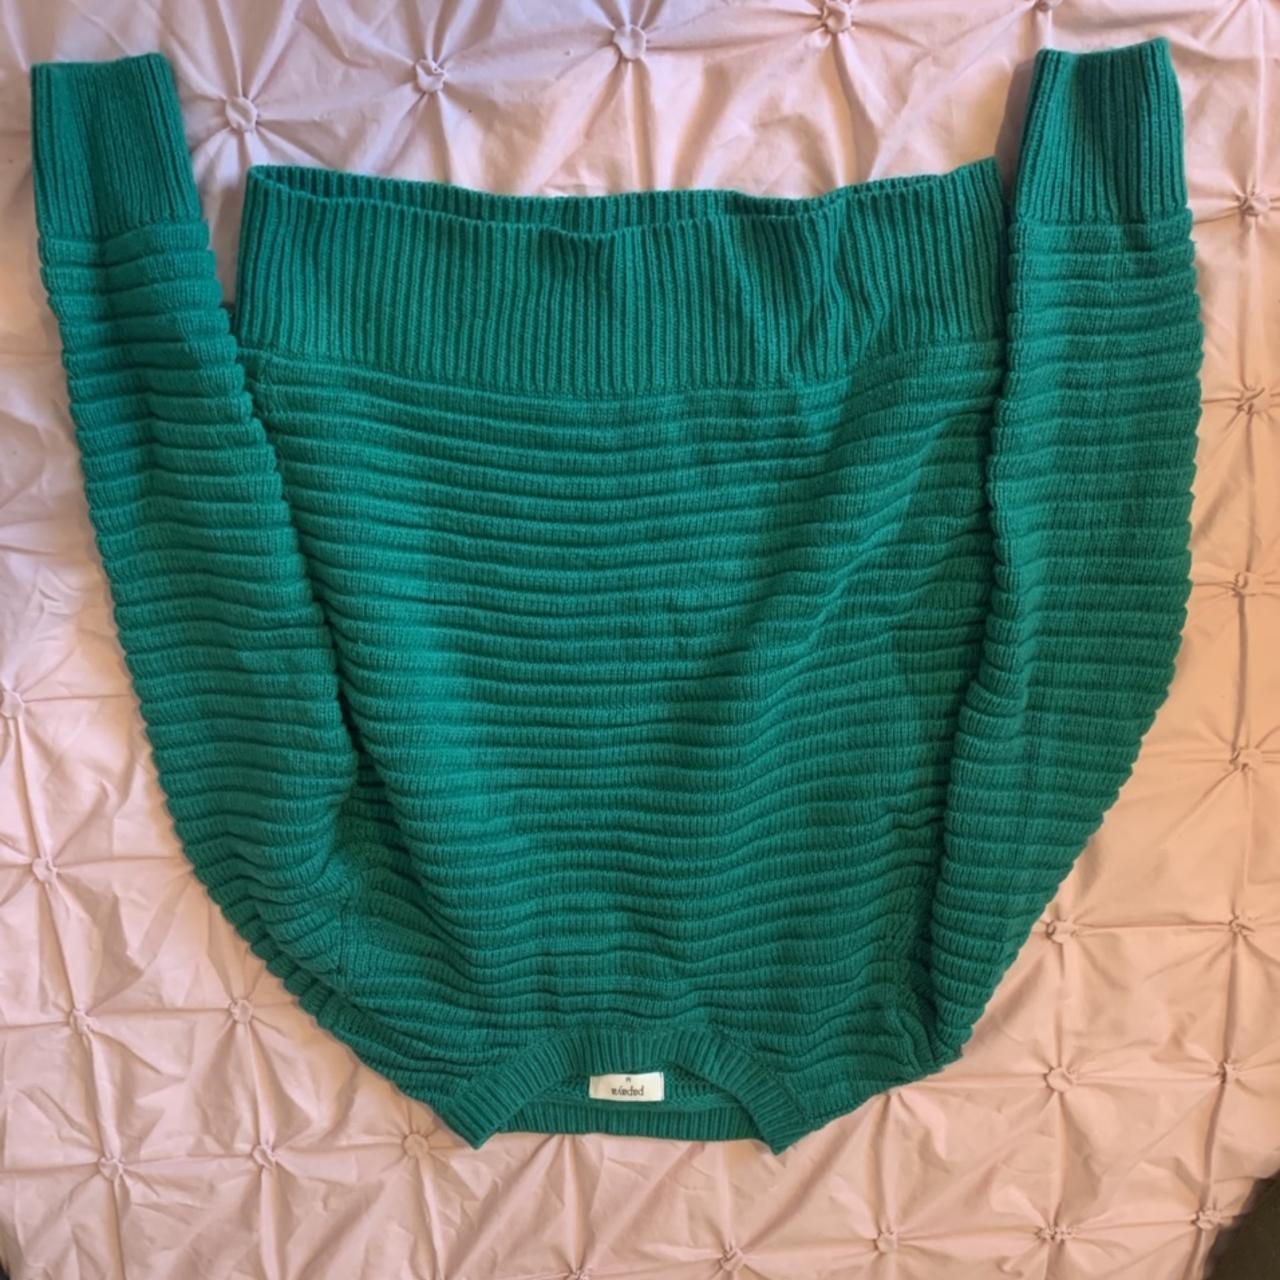 Papaya knitted jumper - Depop